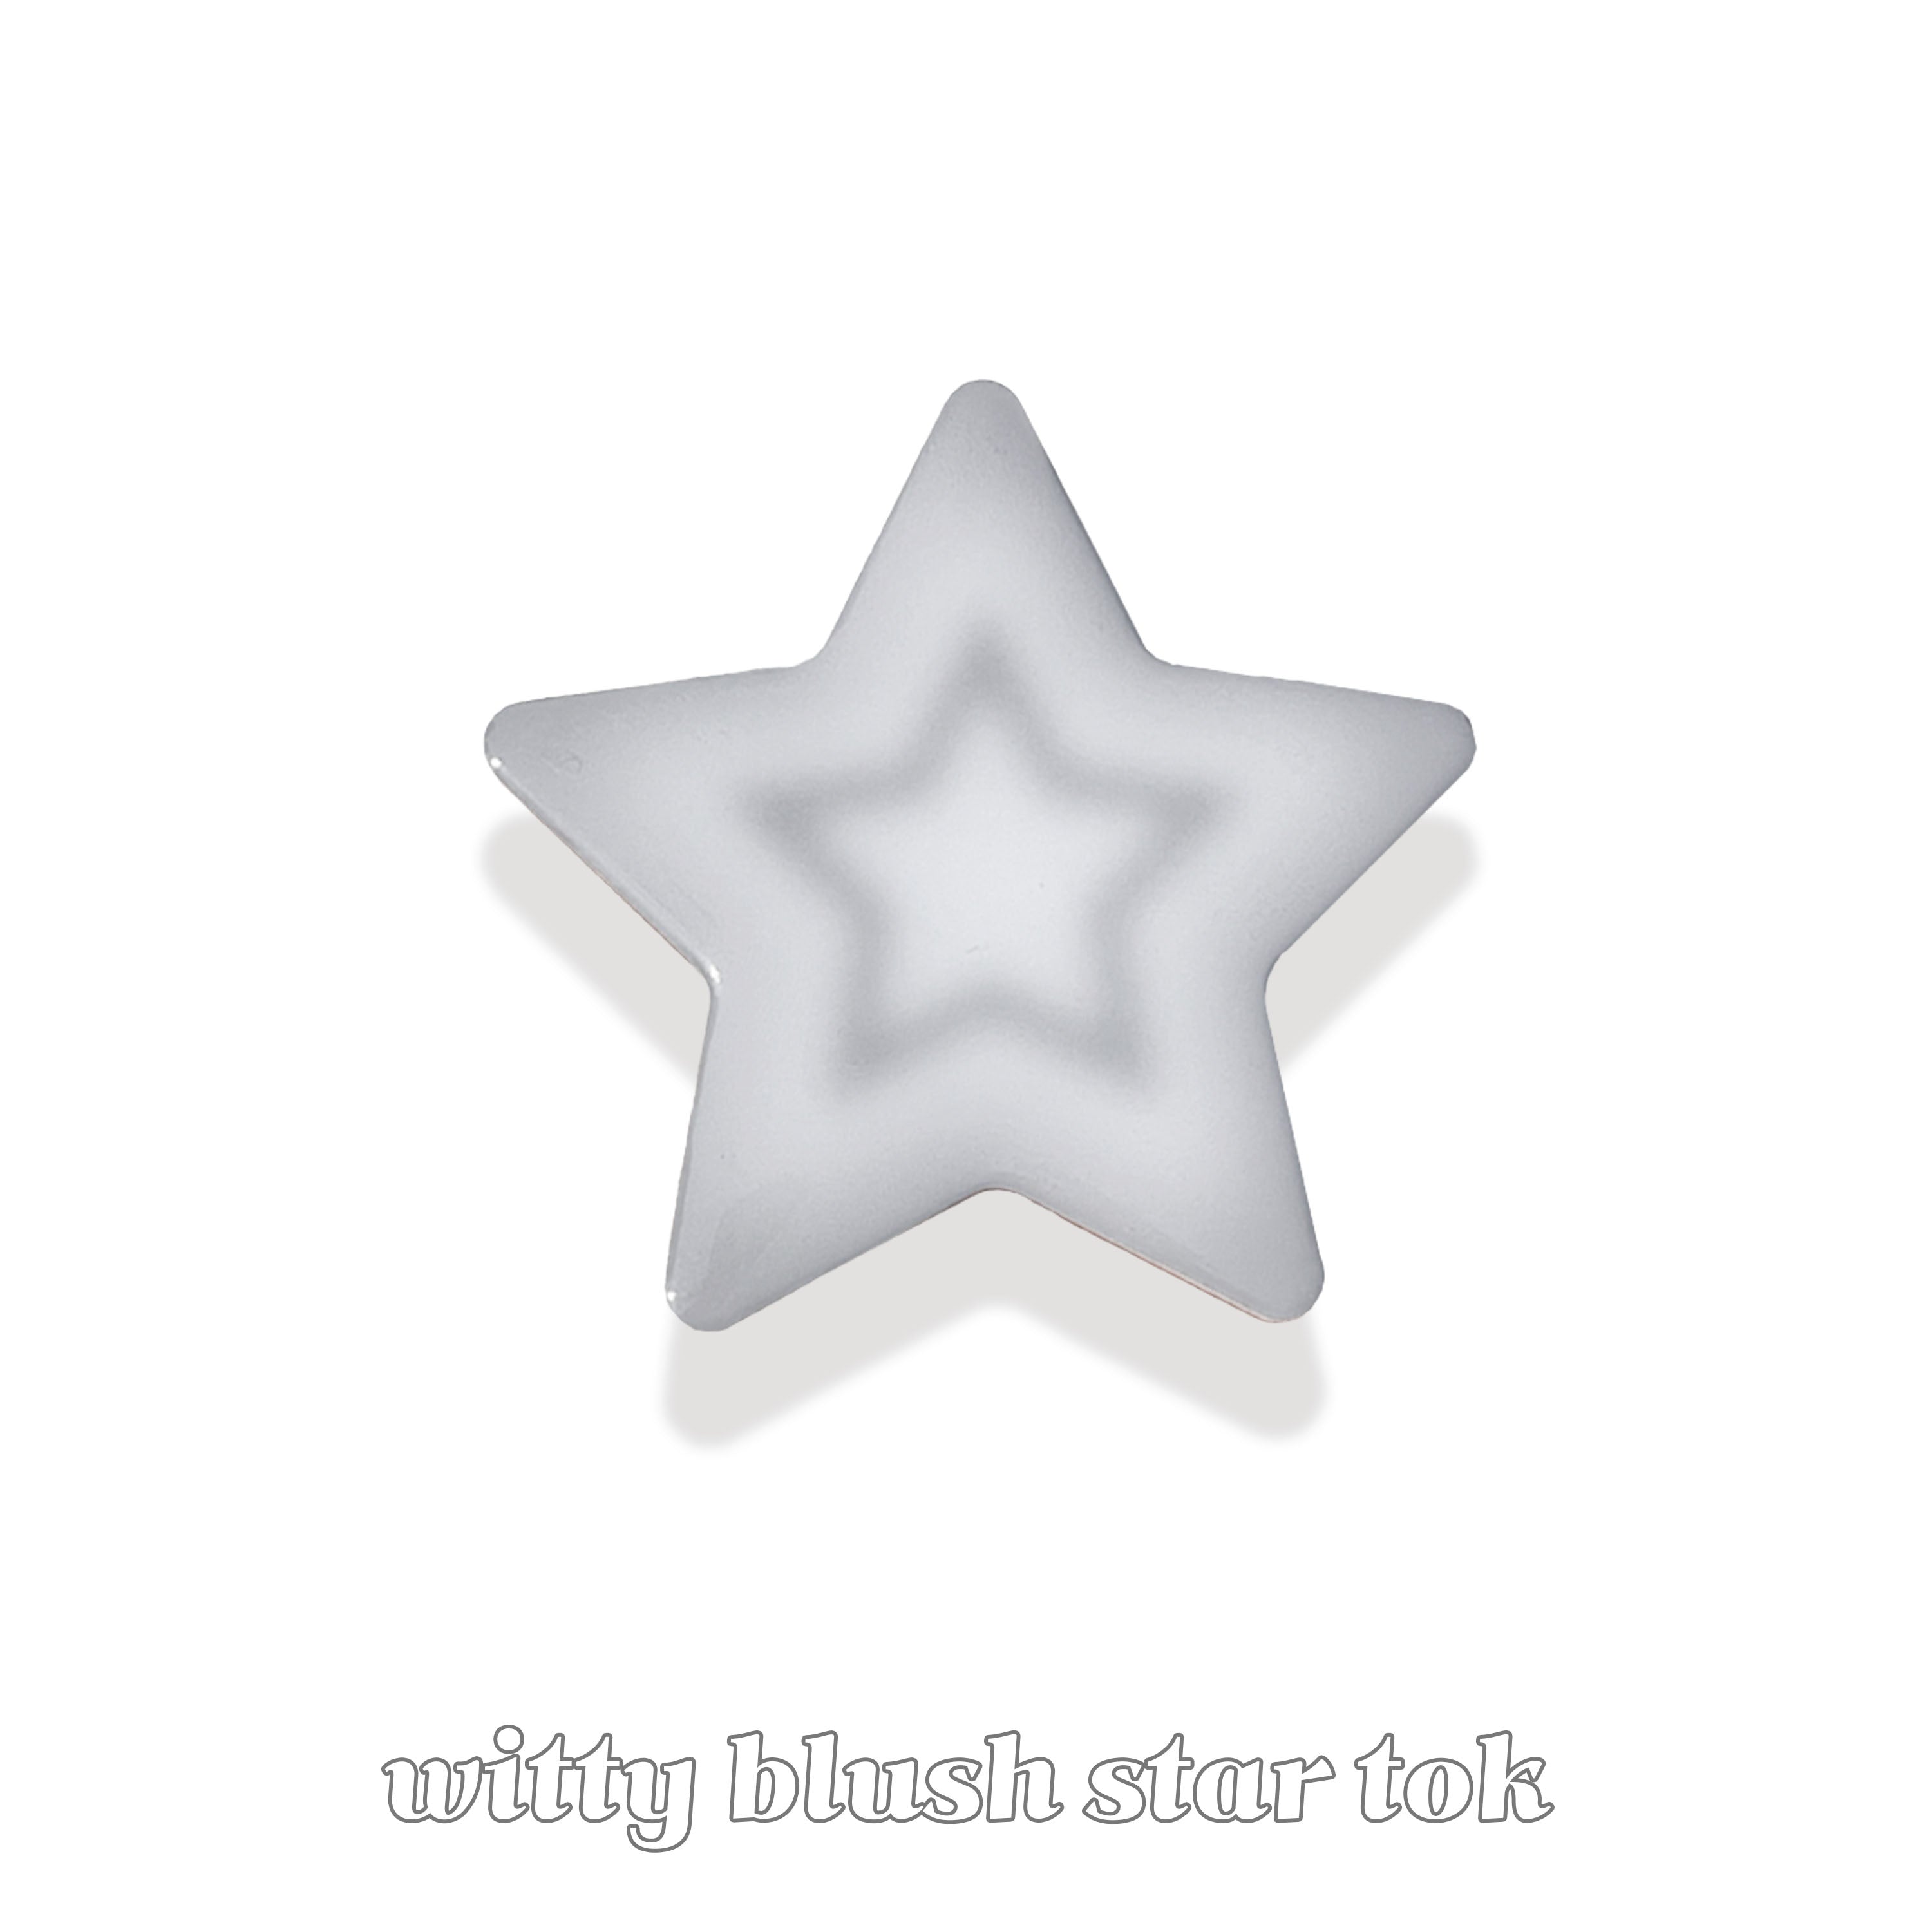 blush star tok (grey)